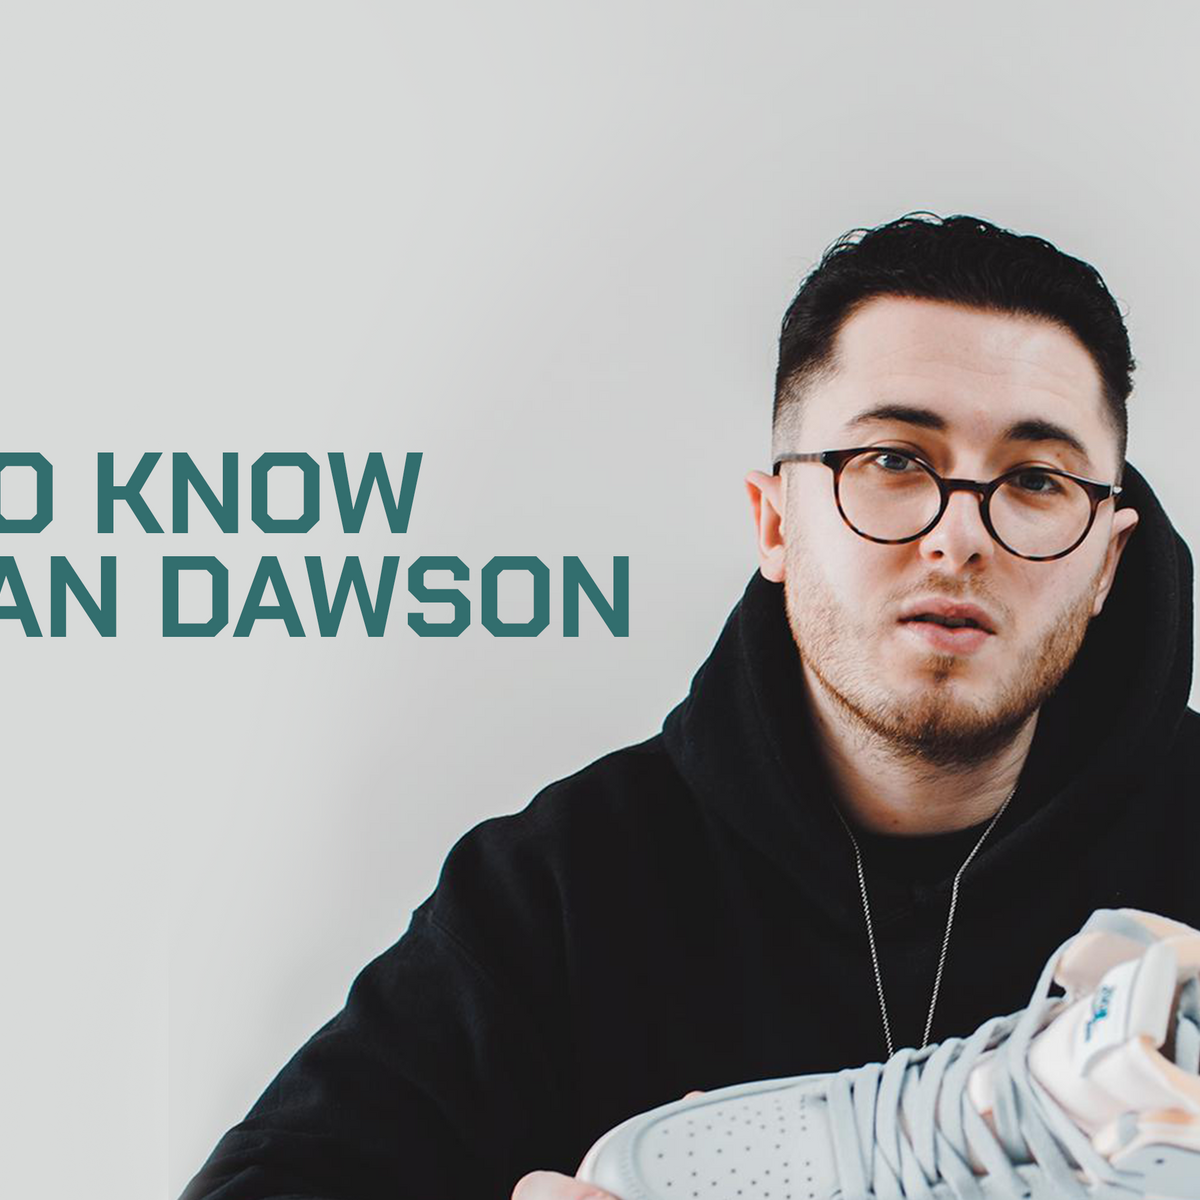 Get To Know - Jordan Dawson